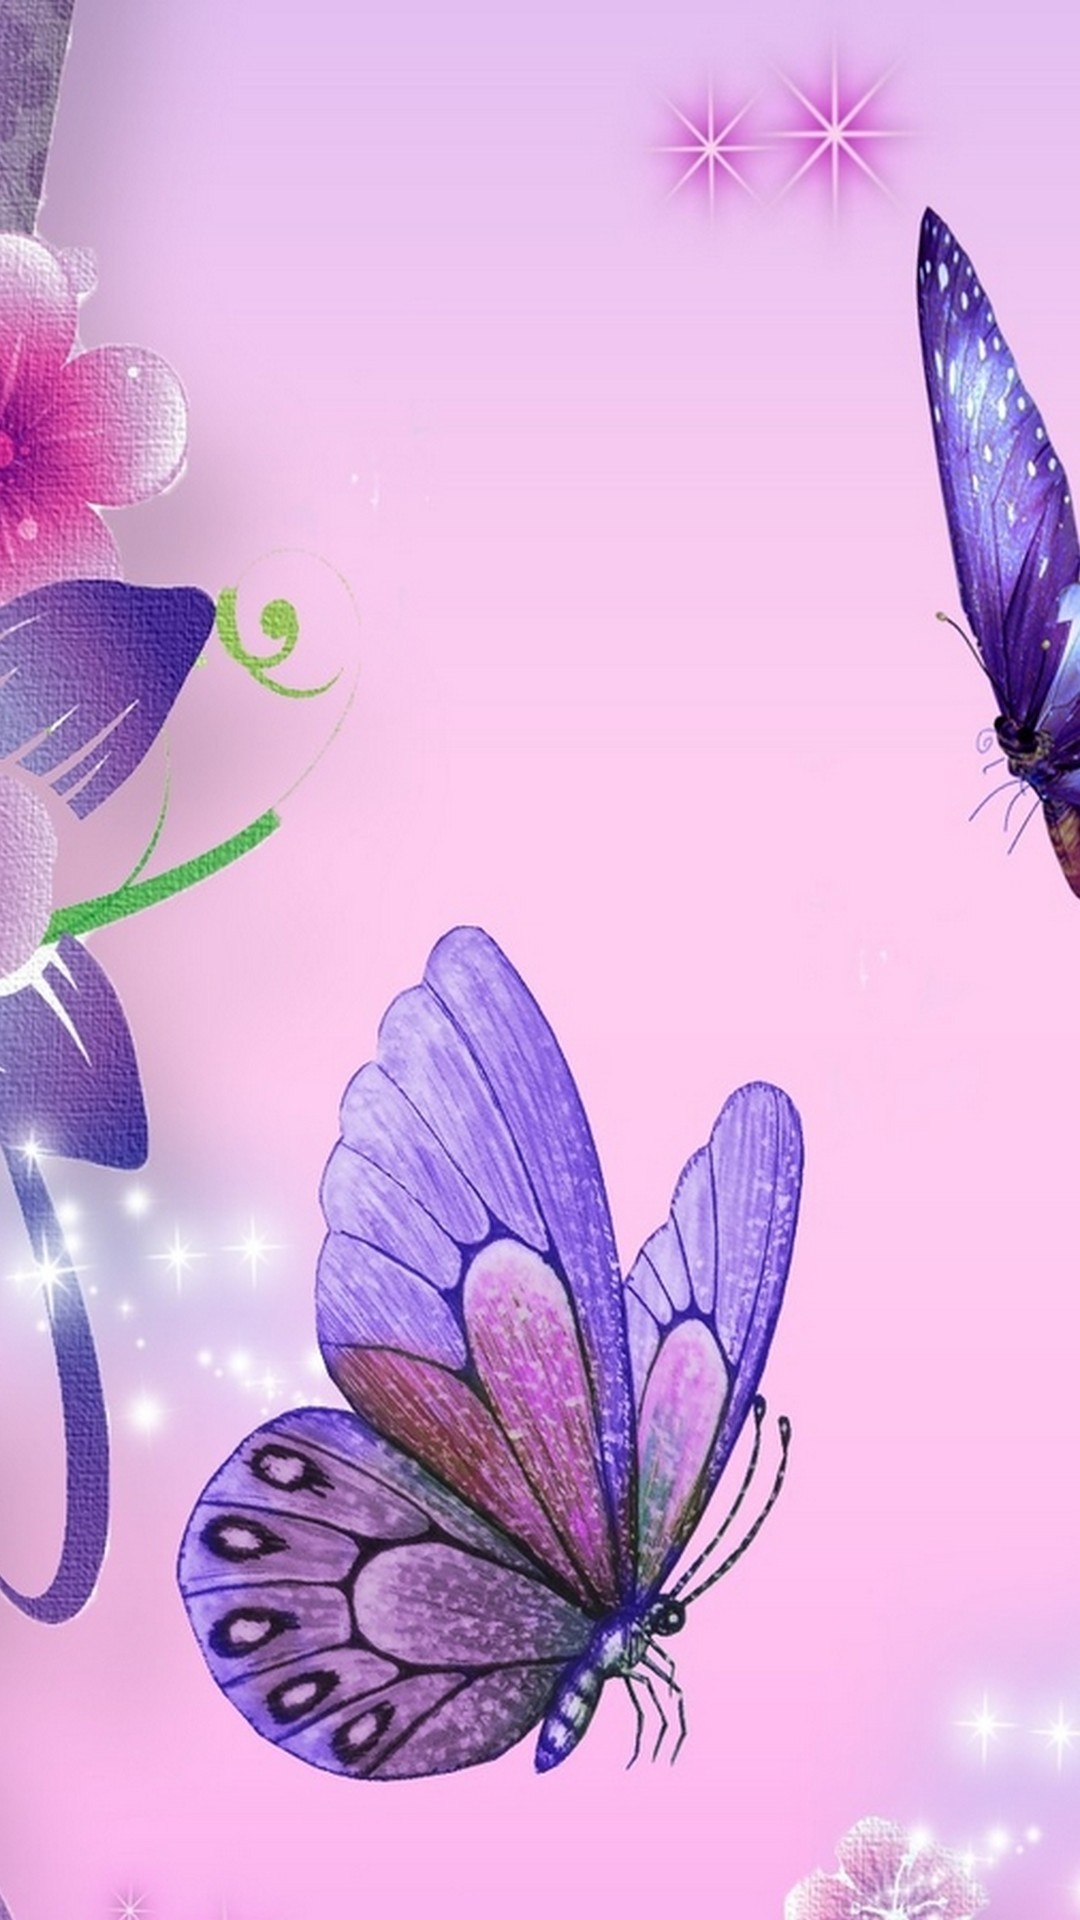 Wallpaper Cute Butterfly iPhone resolution 1080x1920